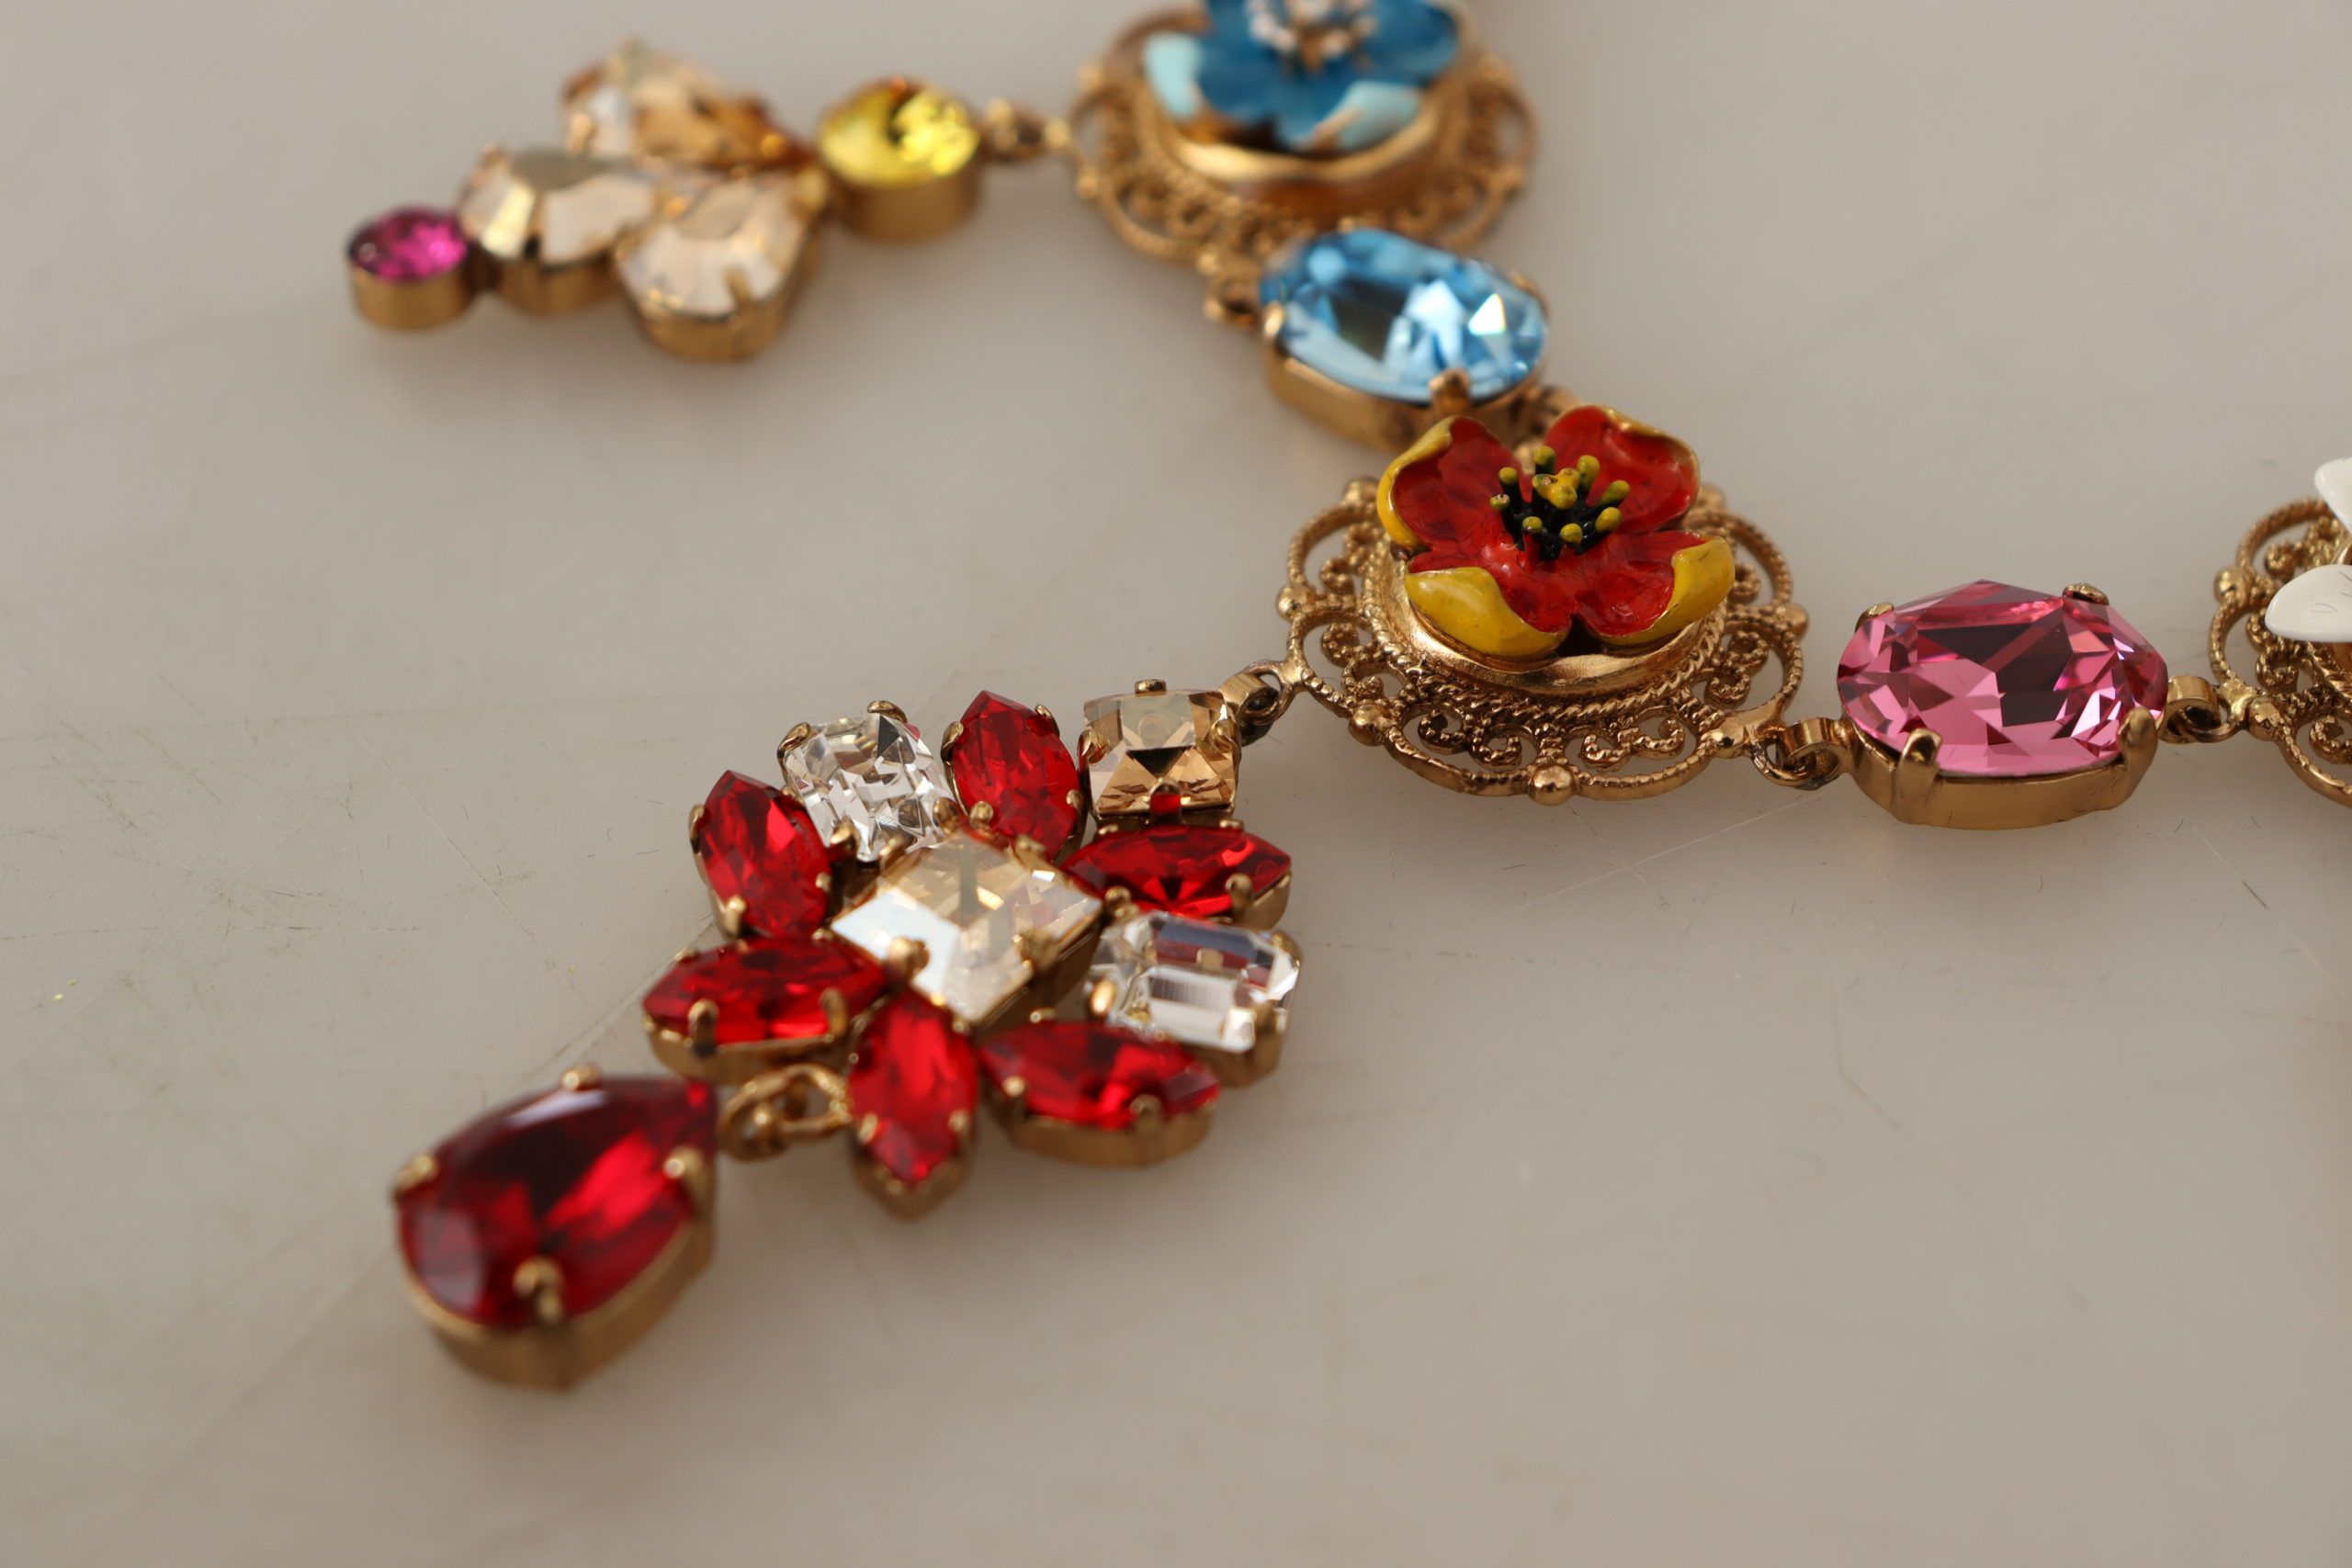 Dolce & Gabbana Elegante collar llamativo floral